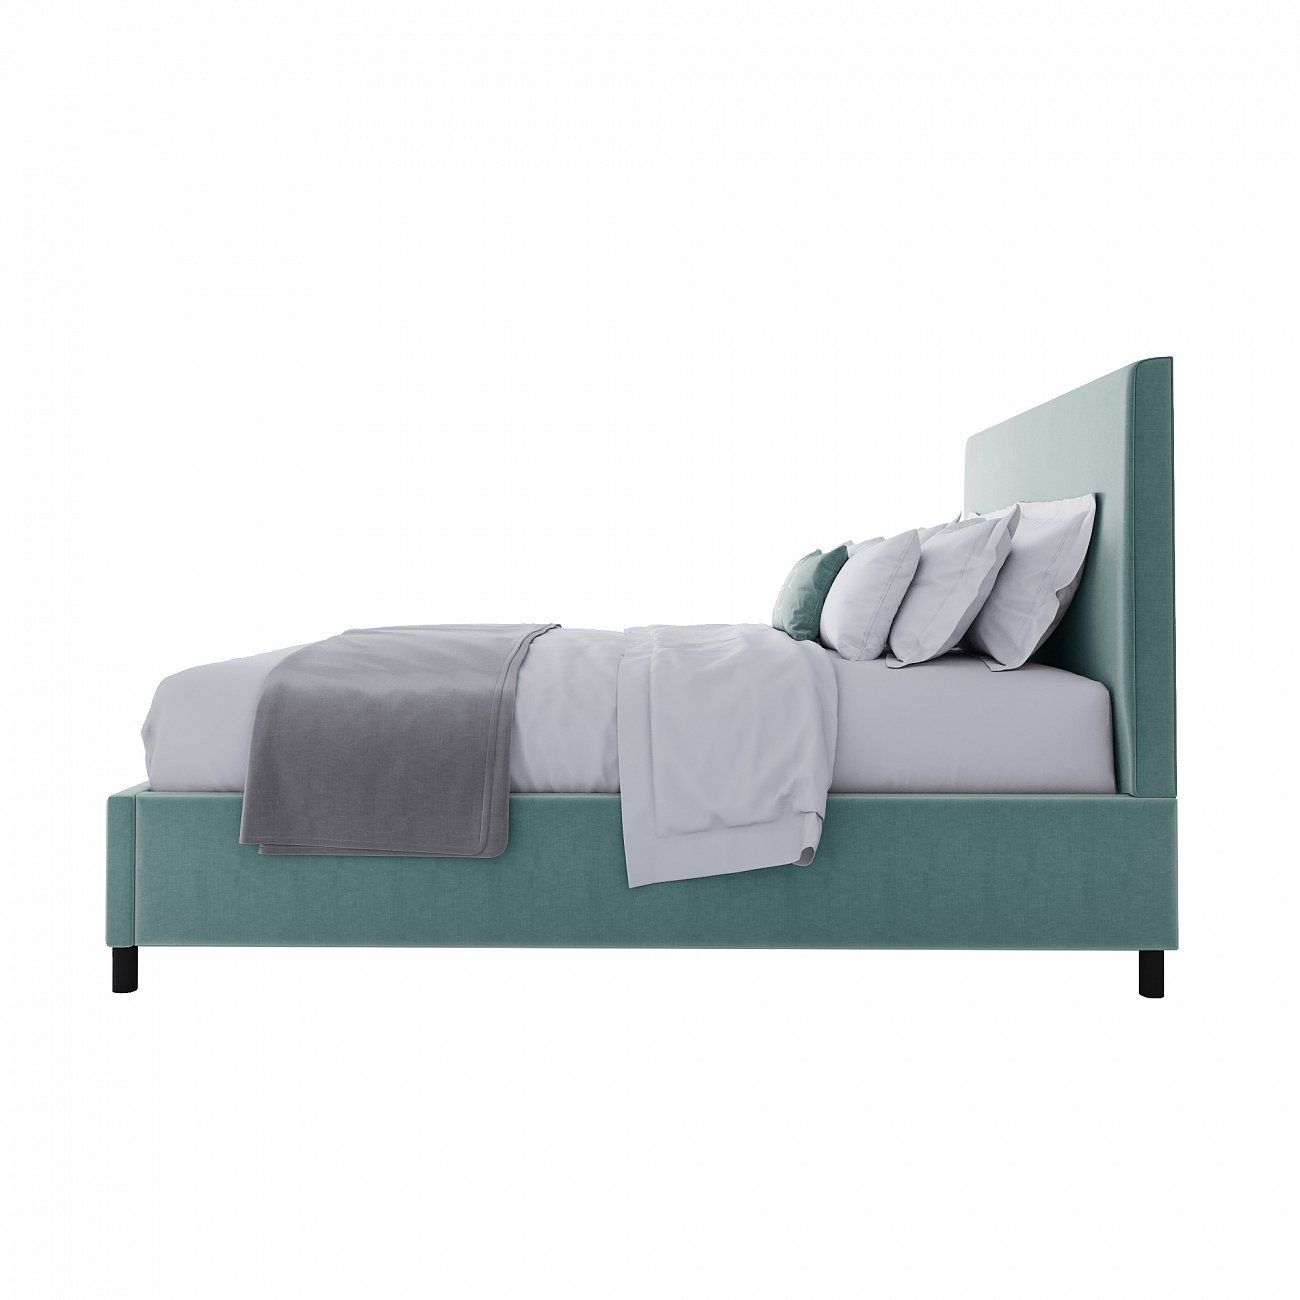 Double bed 160x200 turquoise Novac Platform